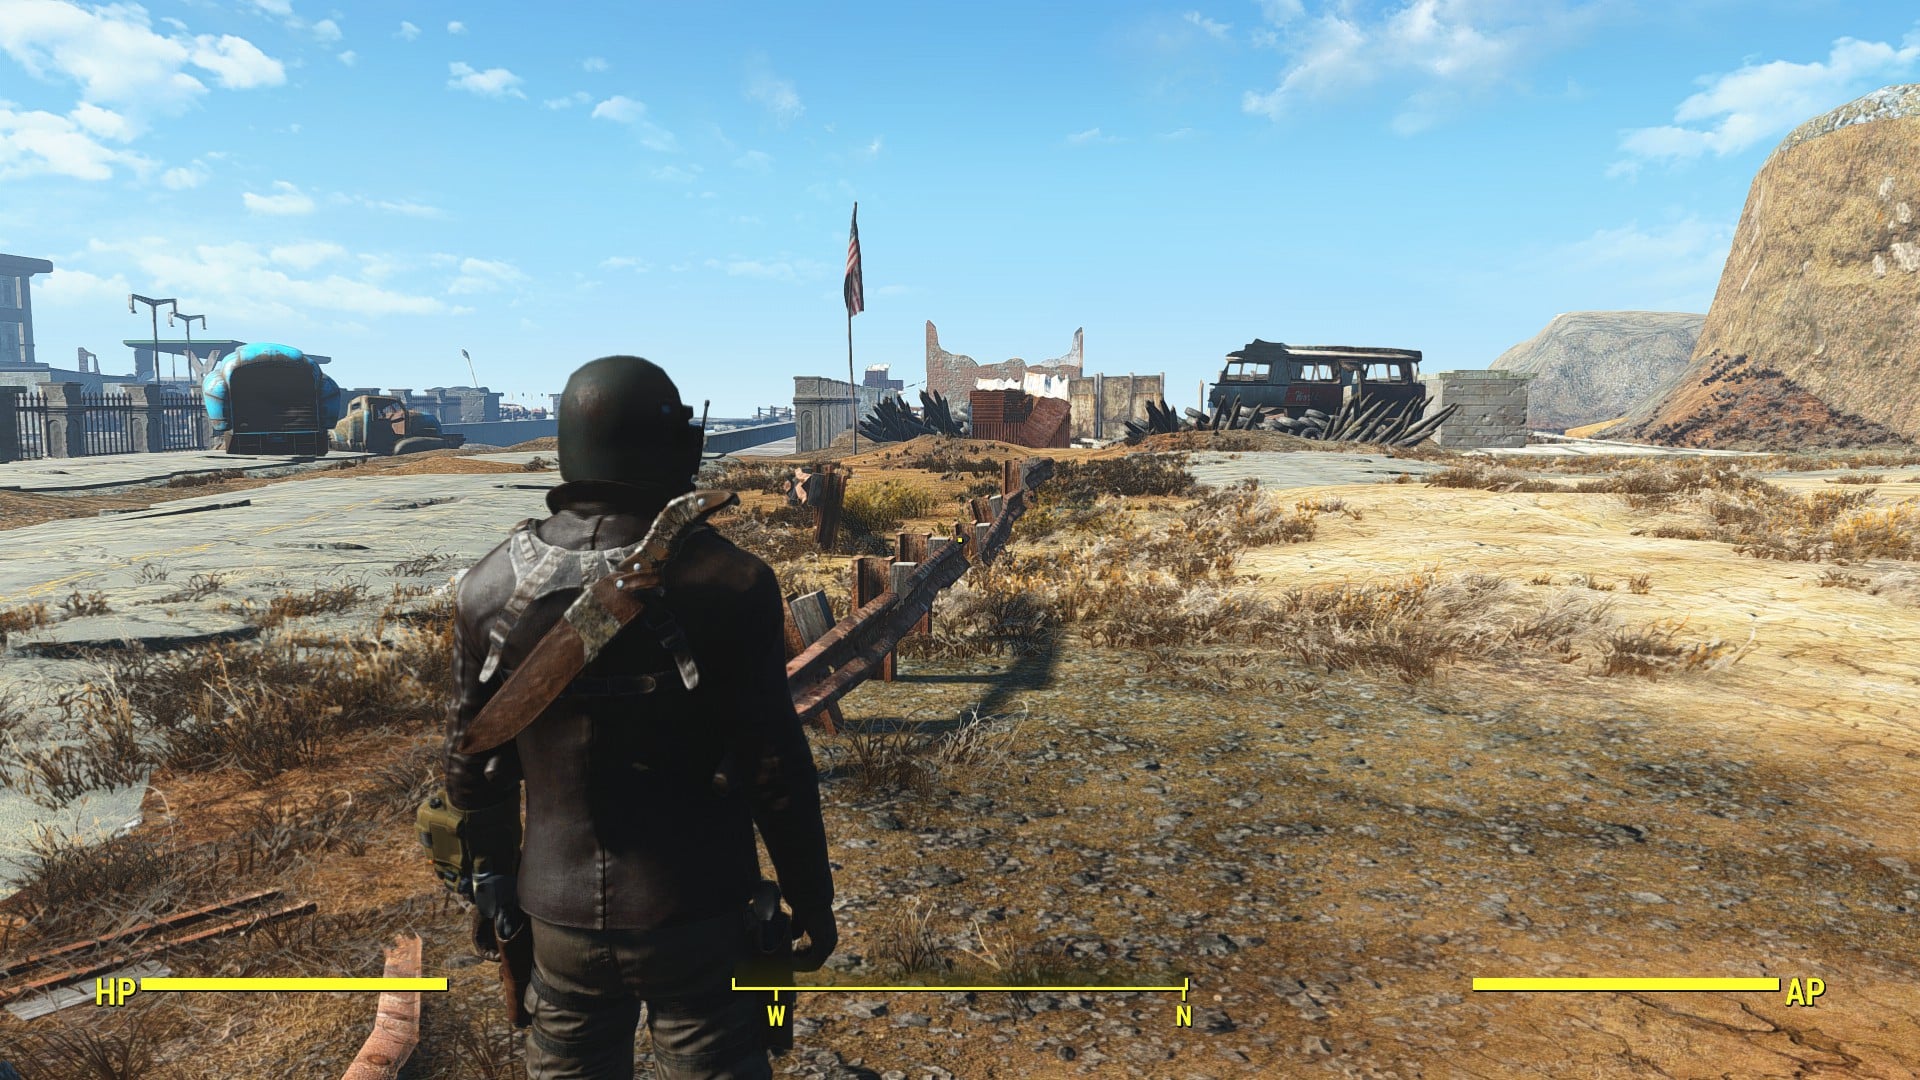 Fallout 4: New Vegas